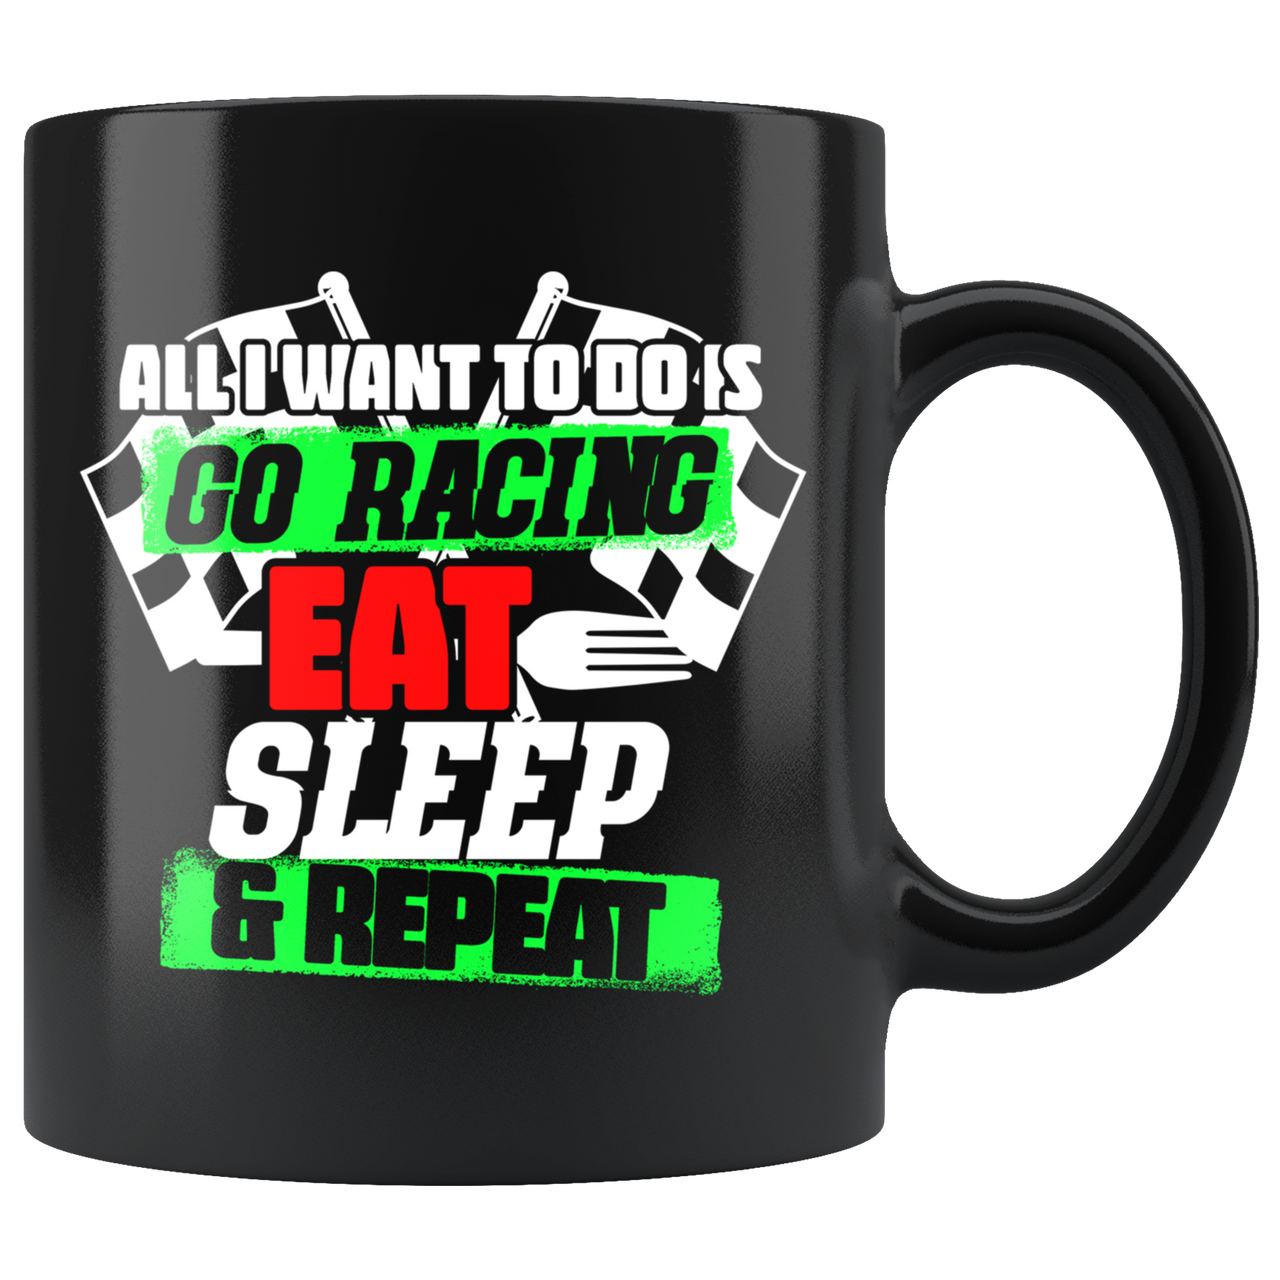 All I Want To Do Is Go Racing Eat Sleep & Repeat Mug!